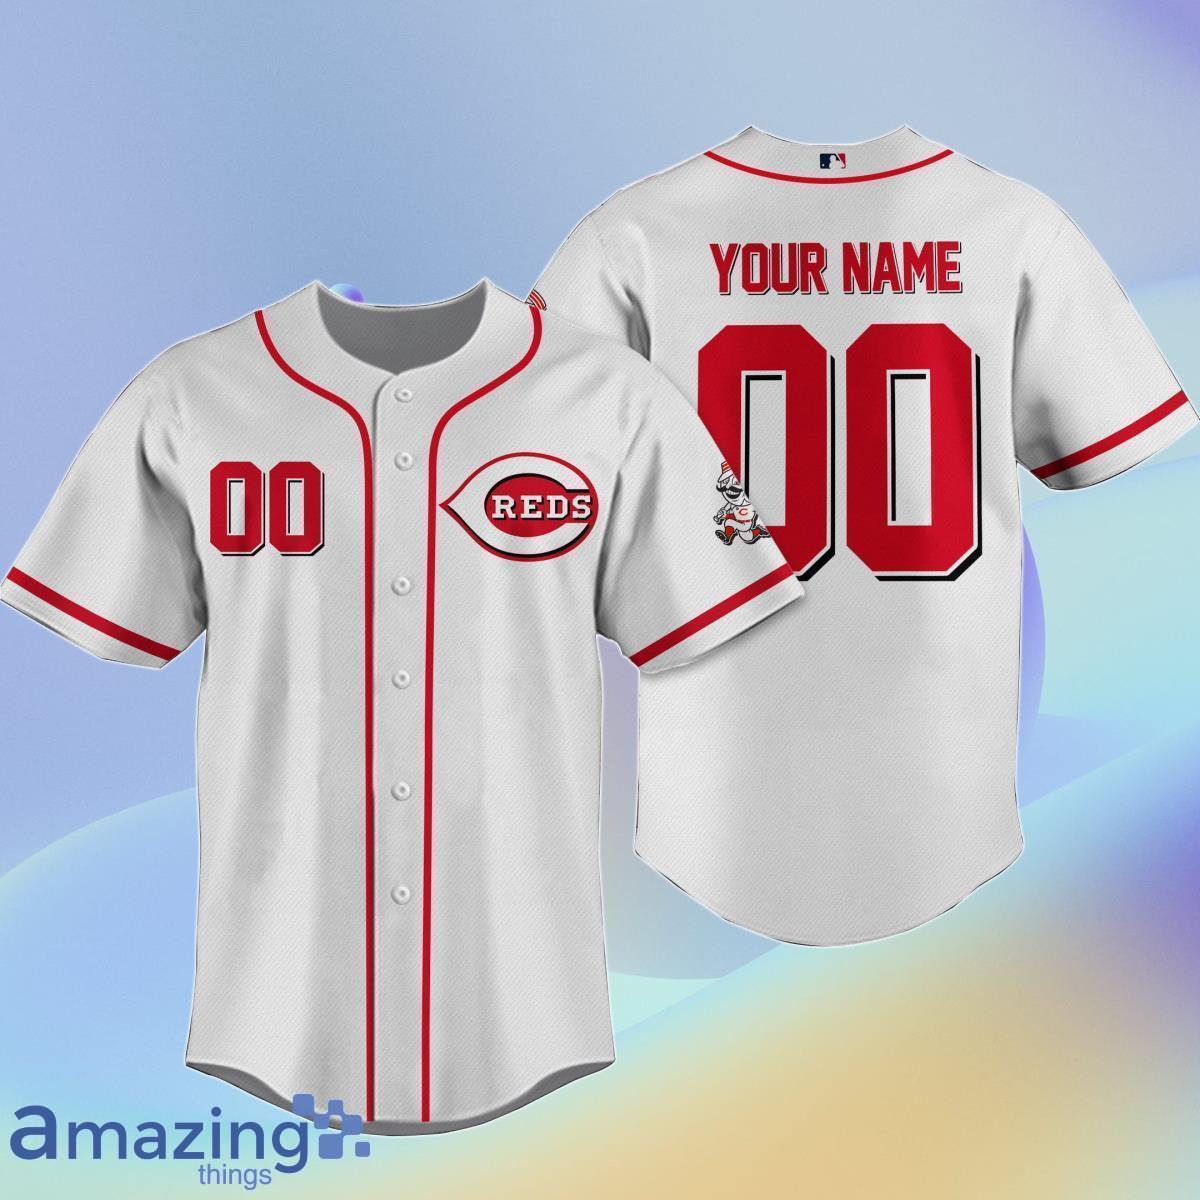 Cincinnati Reds Gray MLB Jerseys for sale